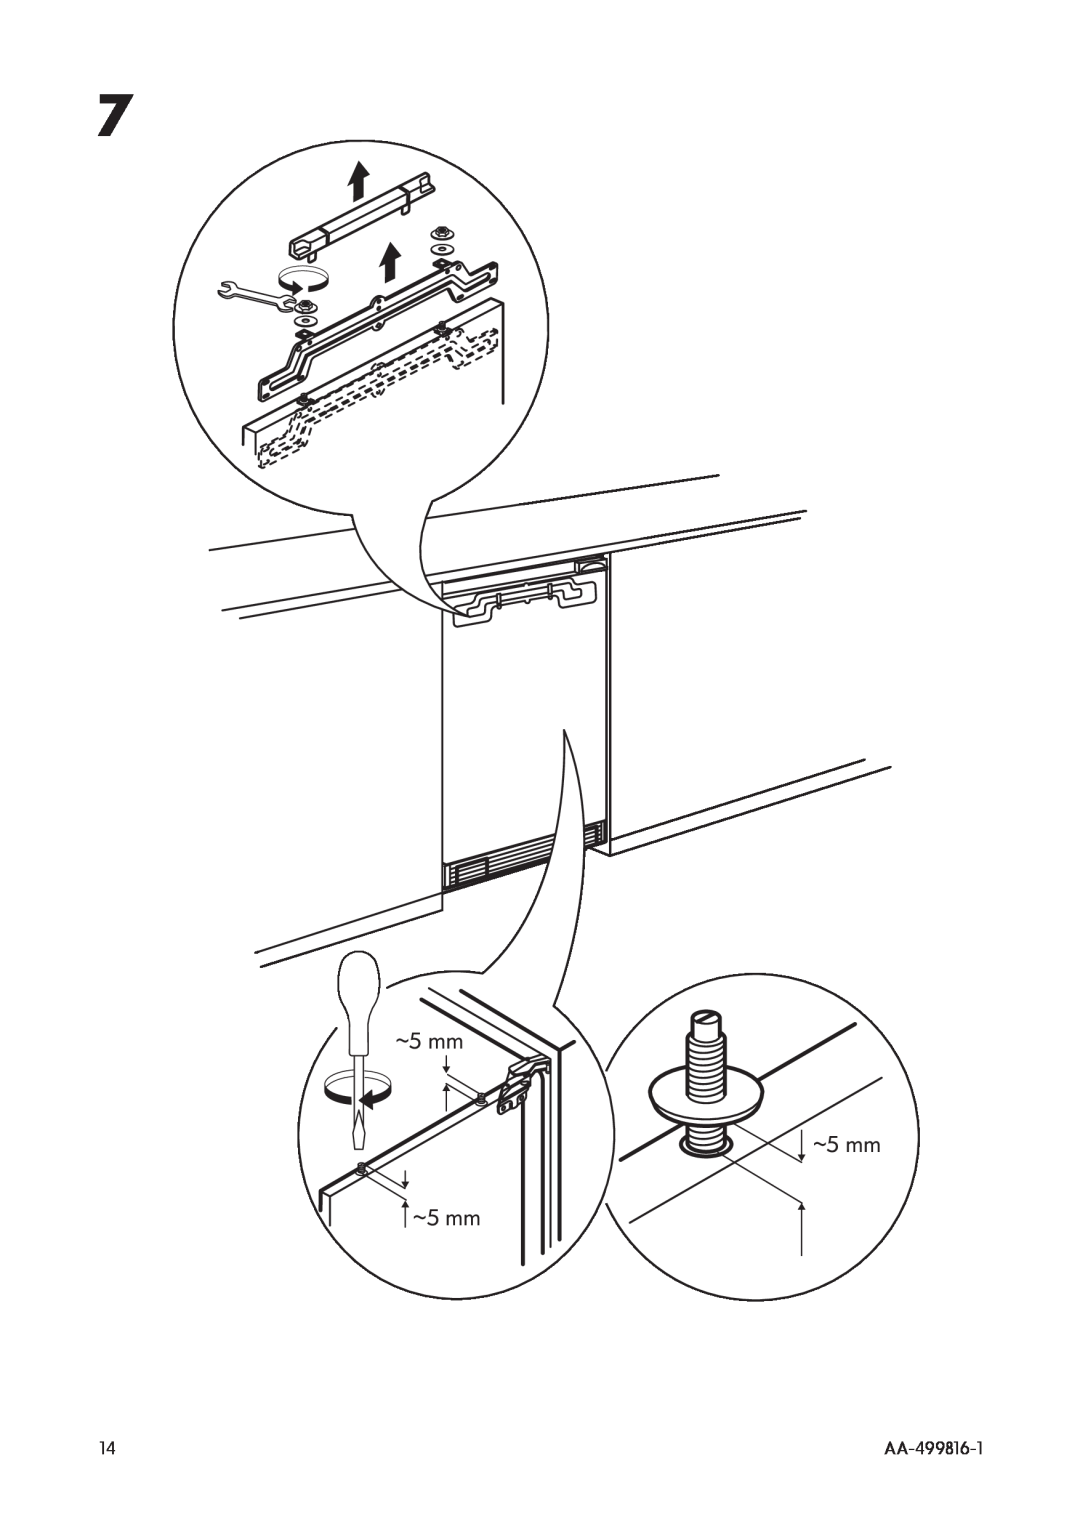 IKEA SC100/17 manual ~5 mm ~5 mm, AA-499816-1 